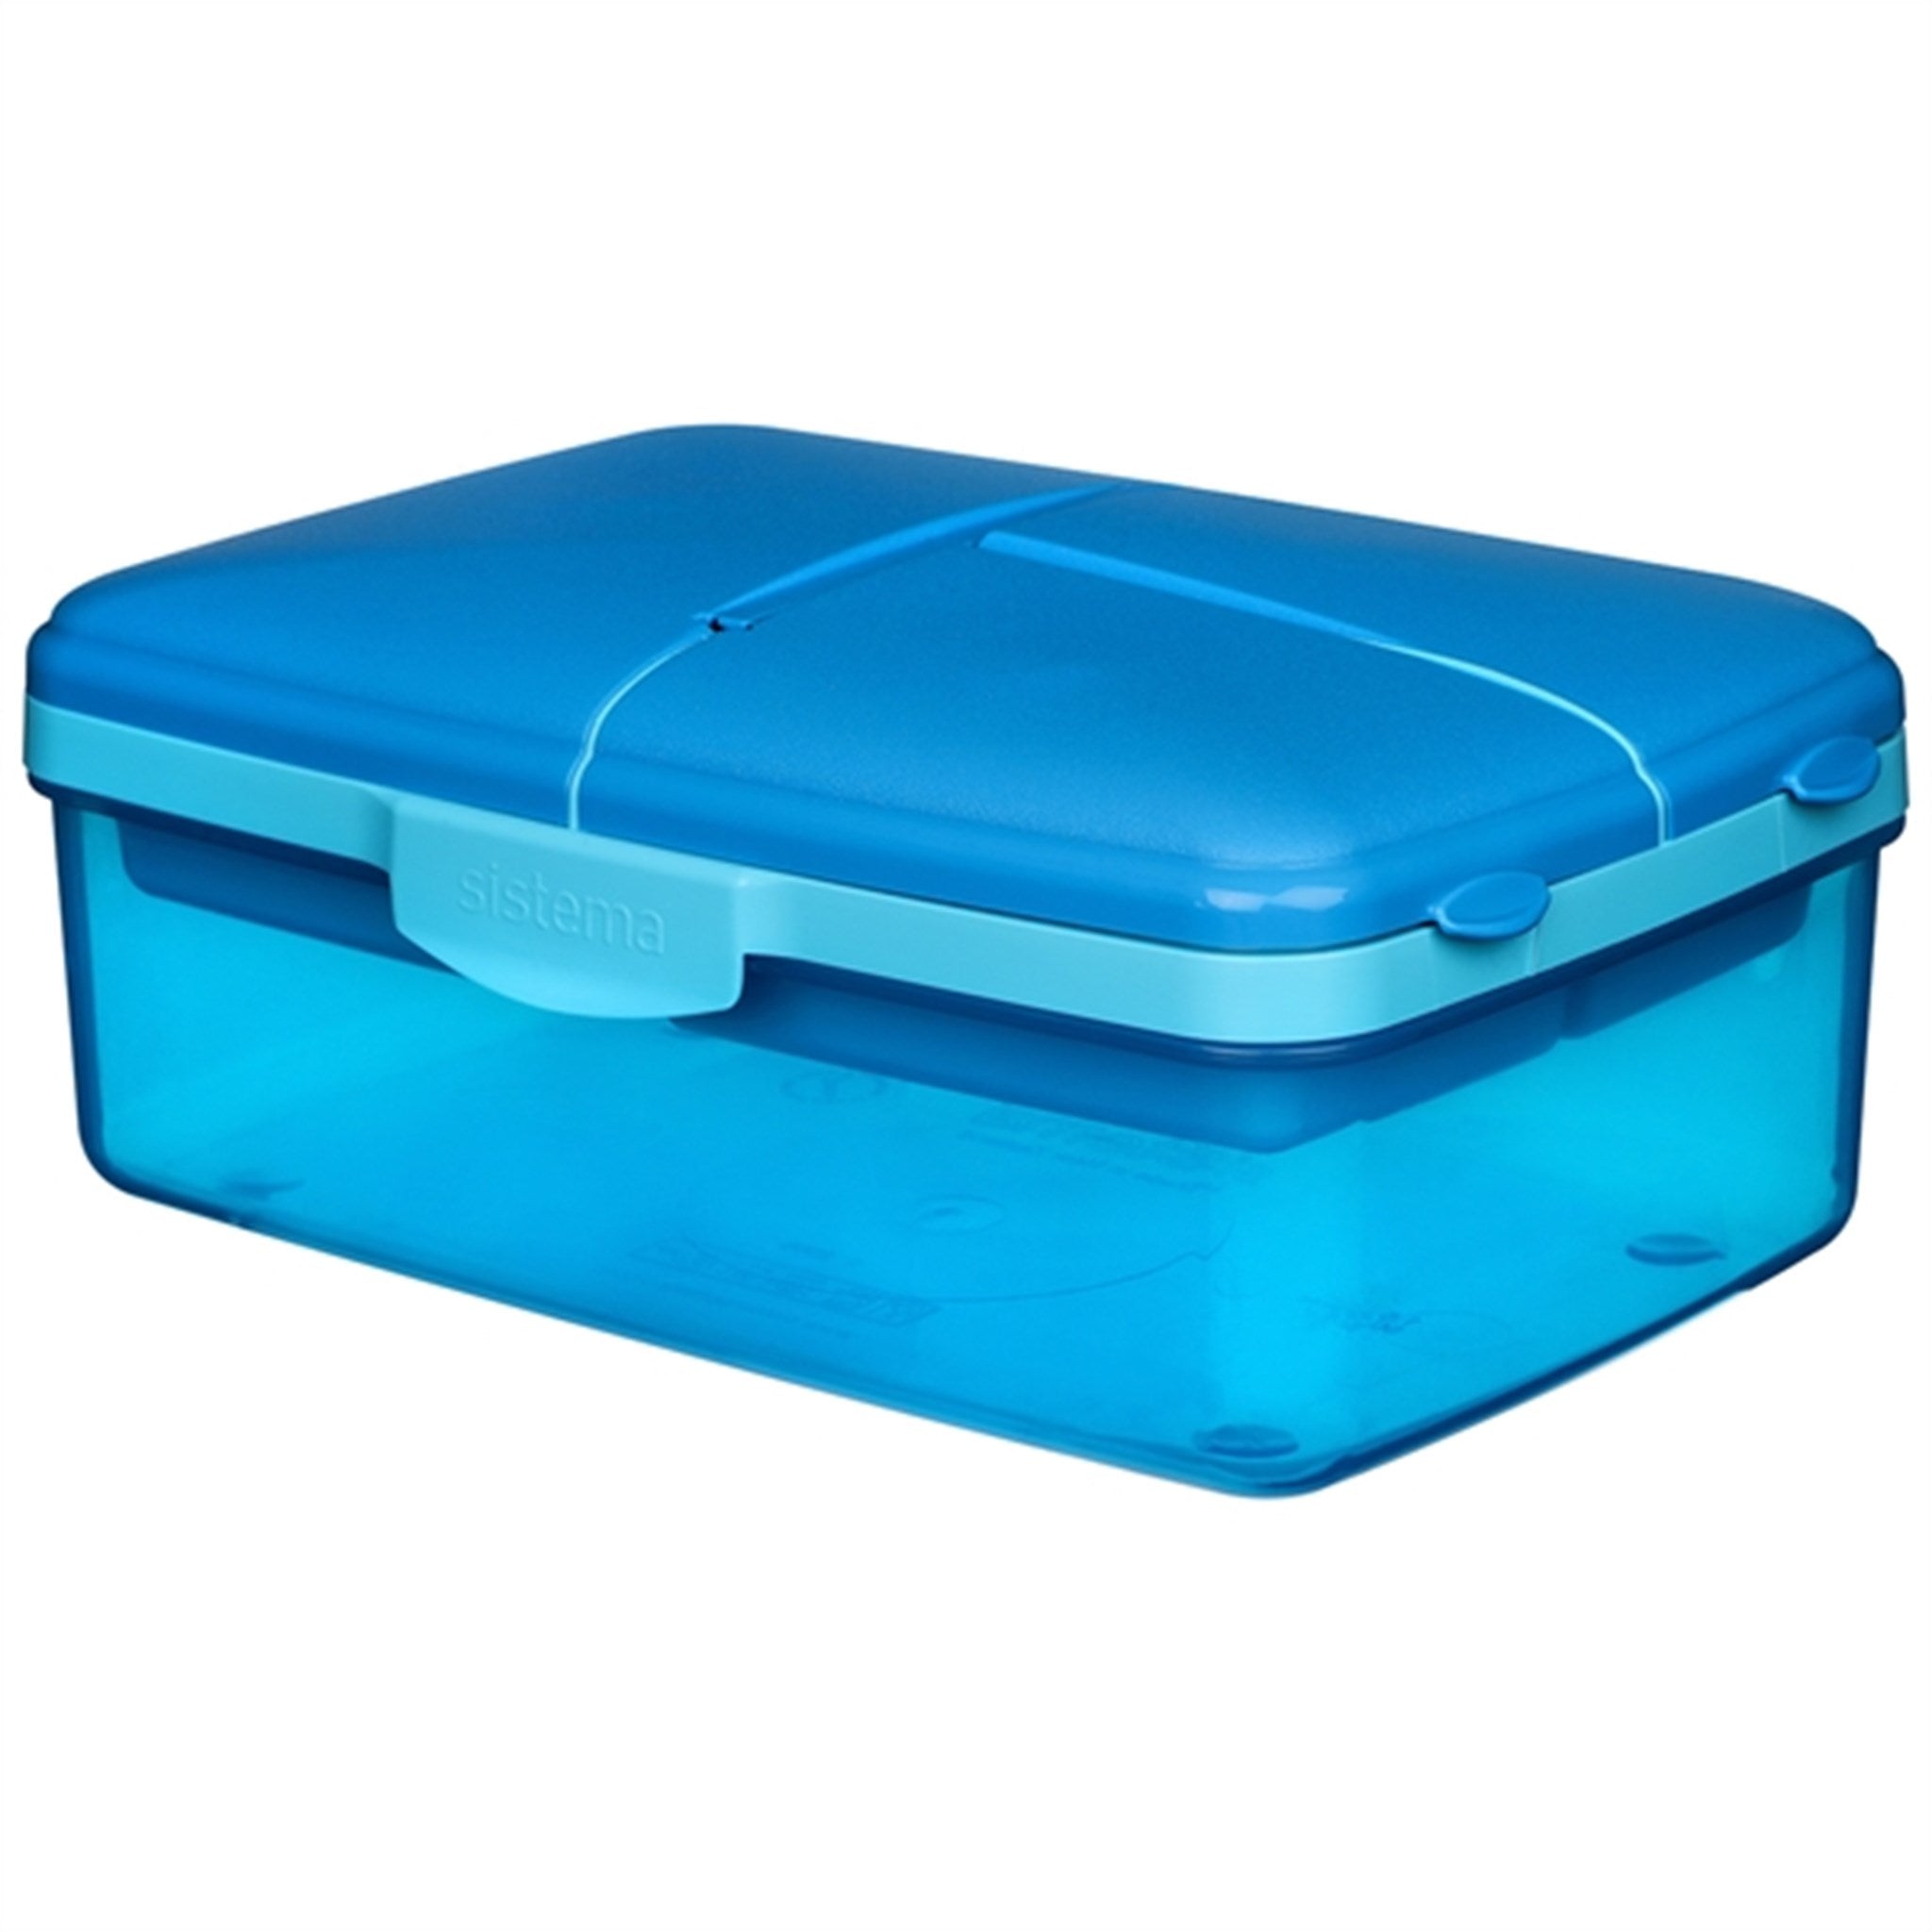 Sistema Slimline Quaddie Lunch Box 1,5 L Blue